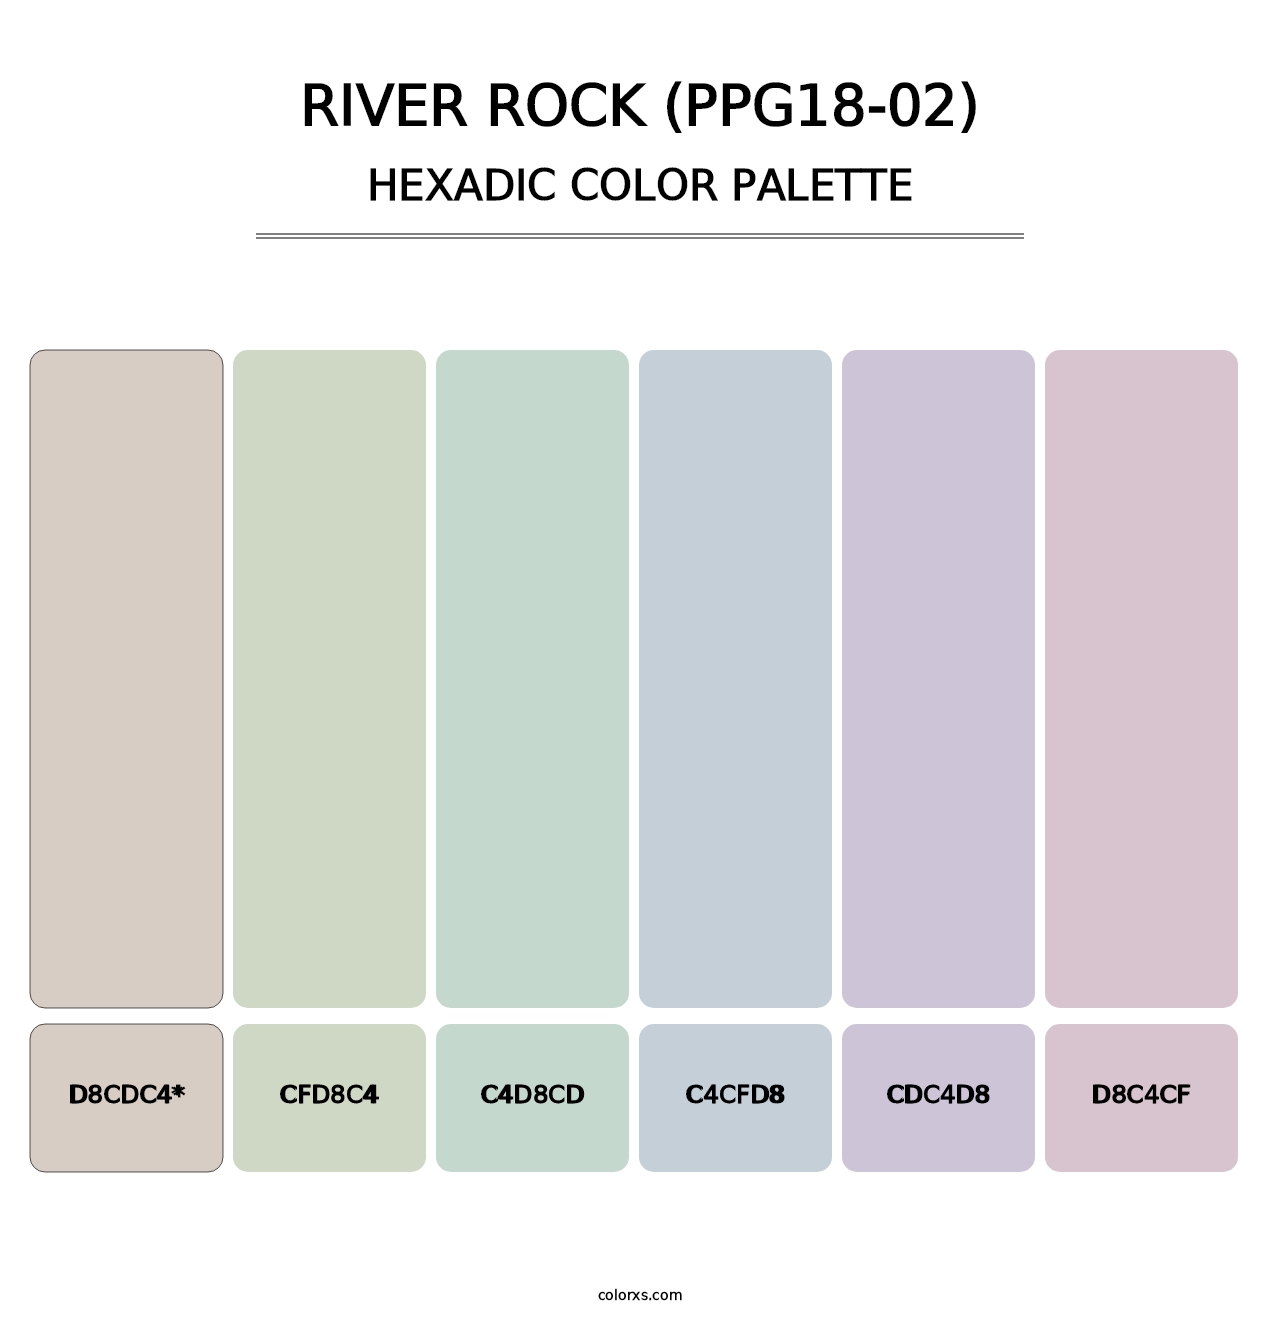 River Rock (PPG18-02) - Hexadic Color Palette